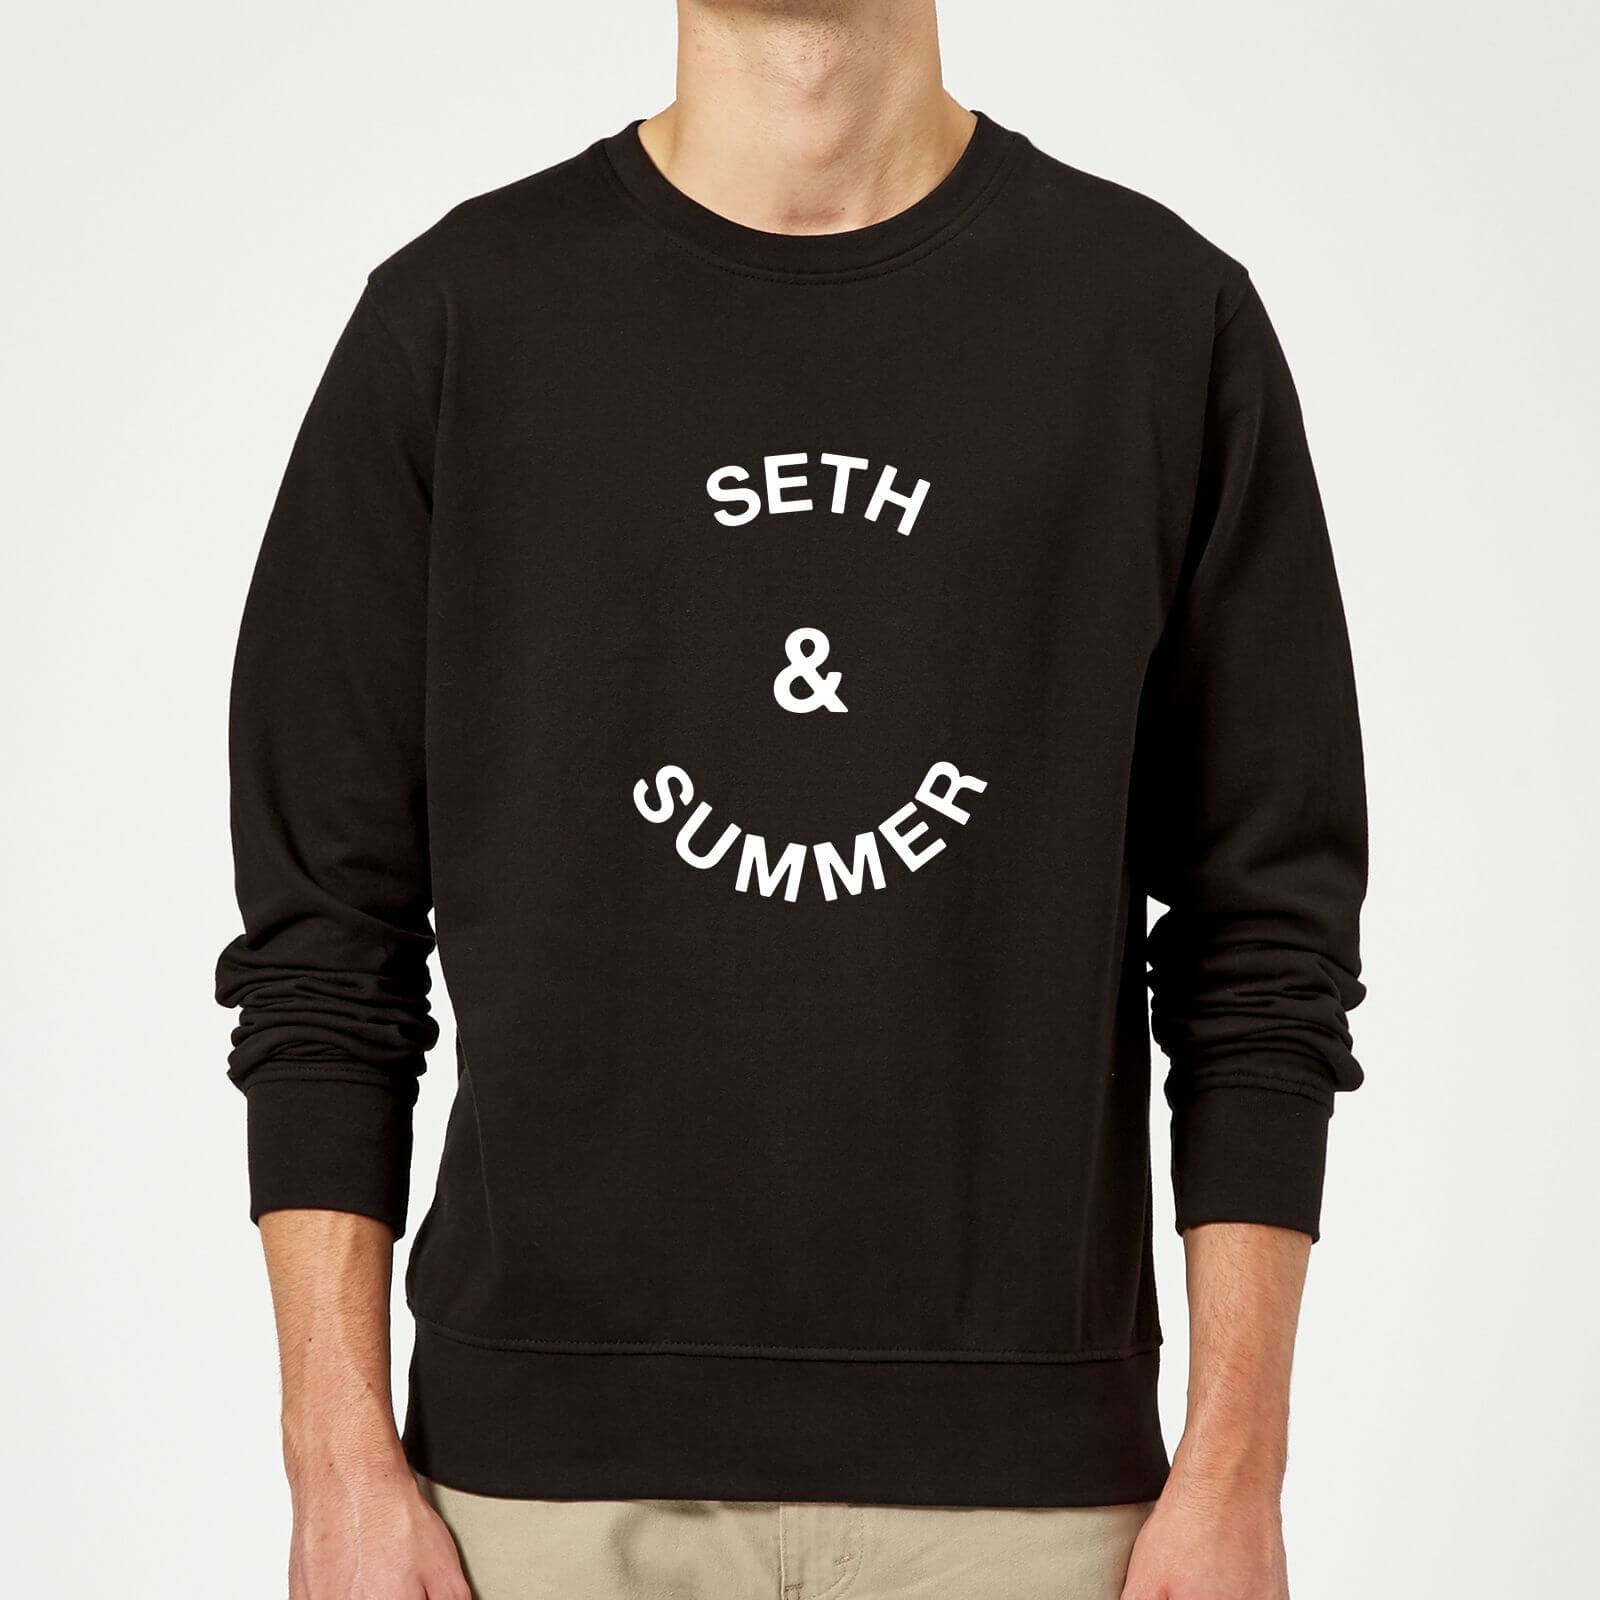 Seth & Summer Sweatshirt - Black - S - Black